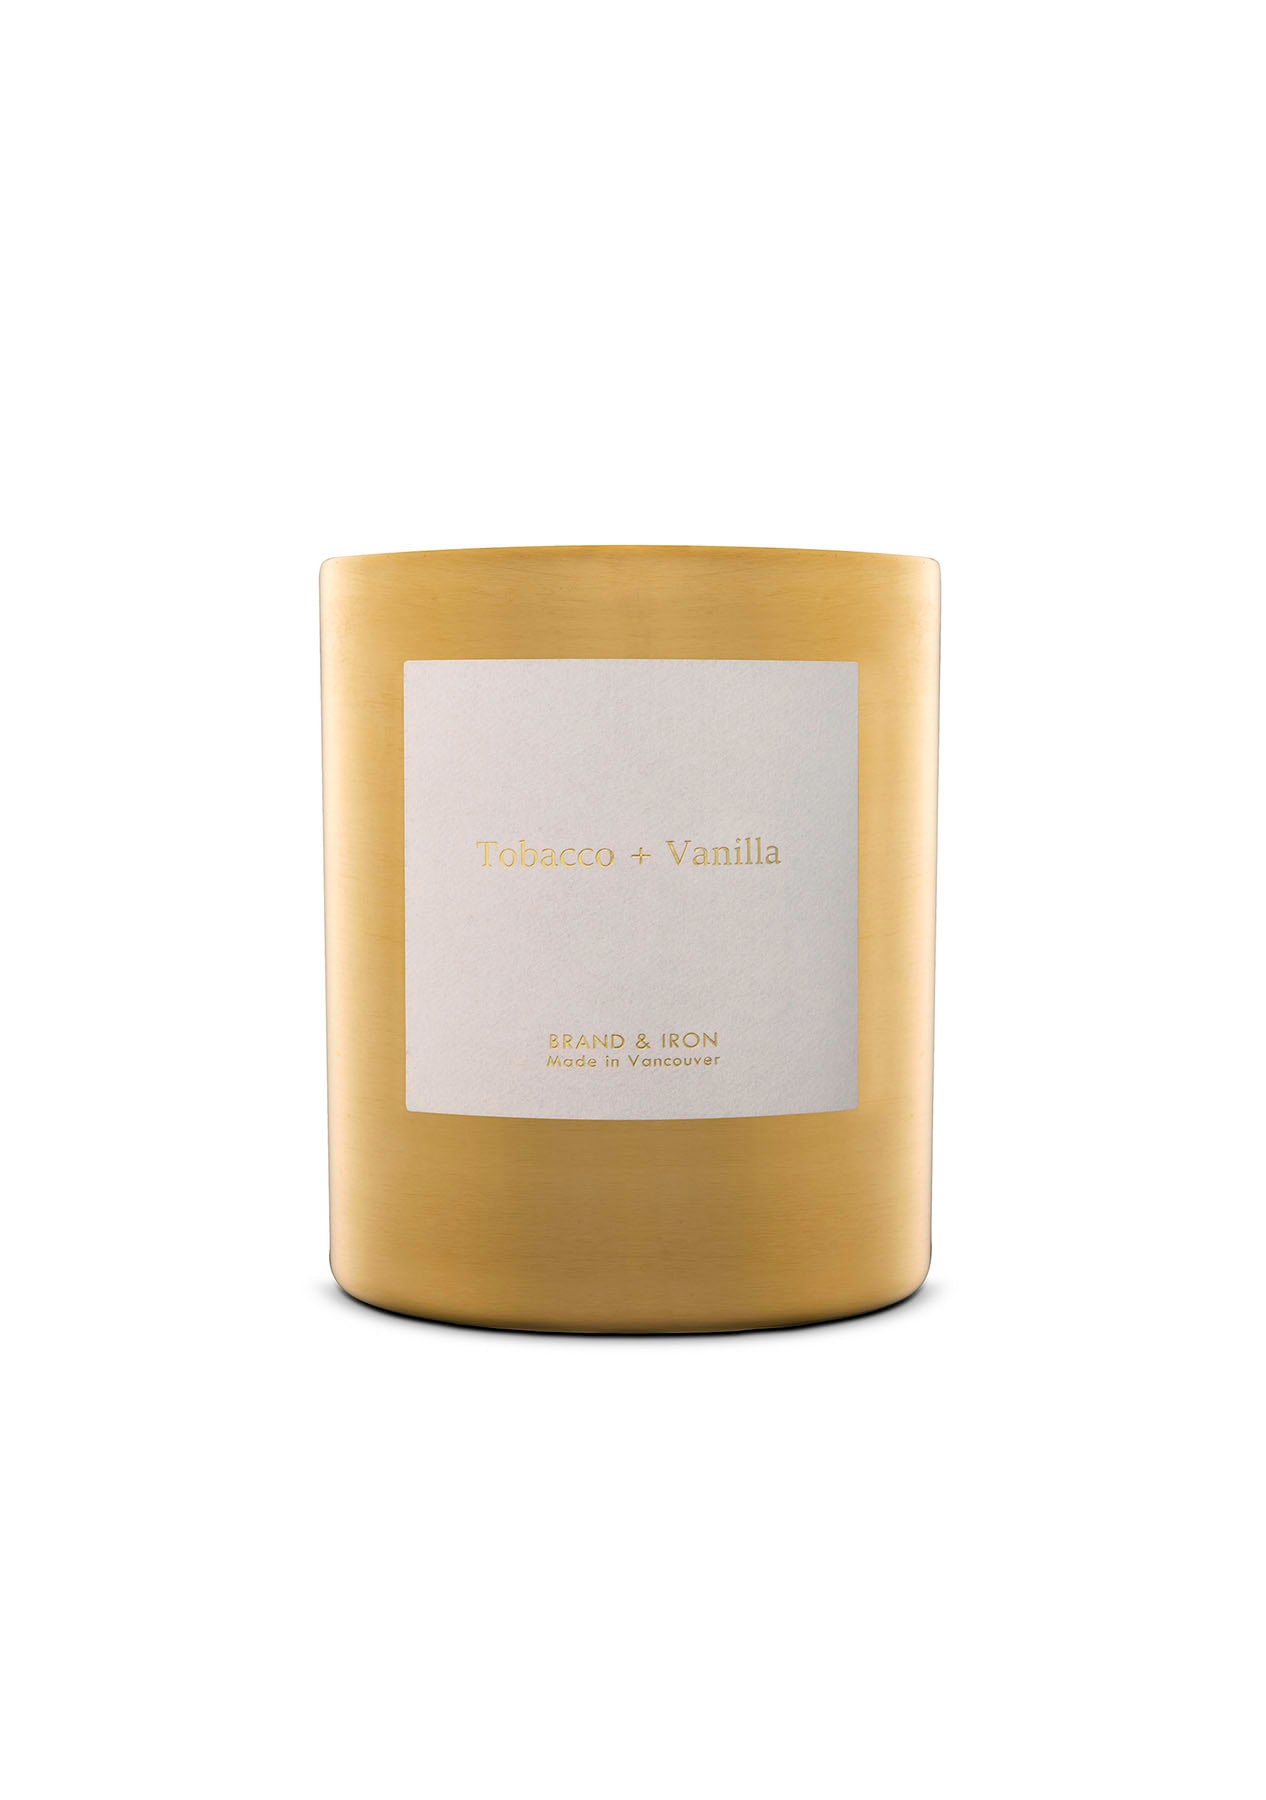 Goldie Tobacco + Vanilla Candle